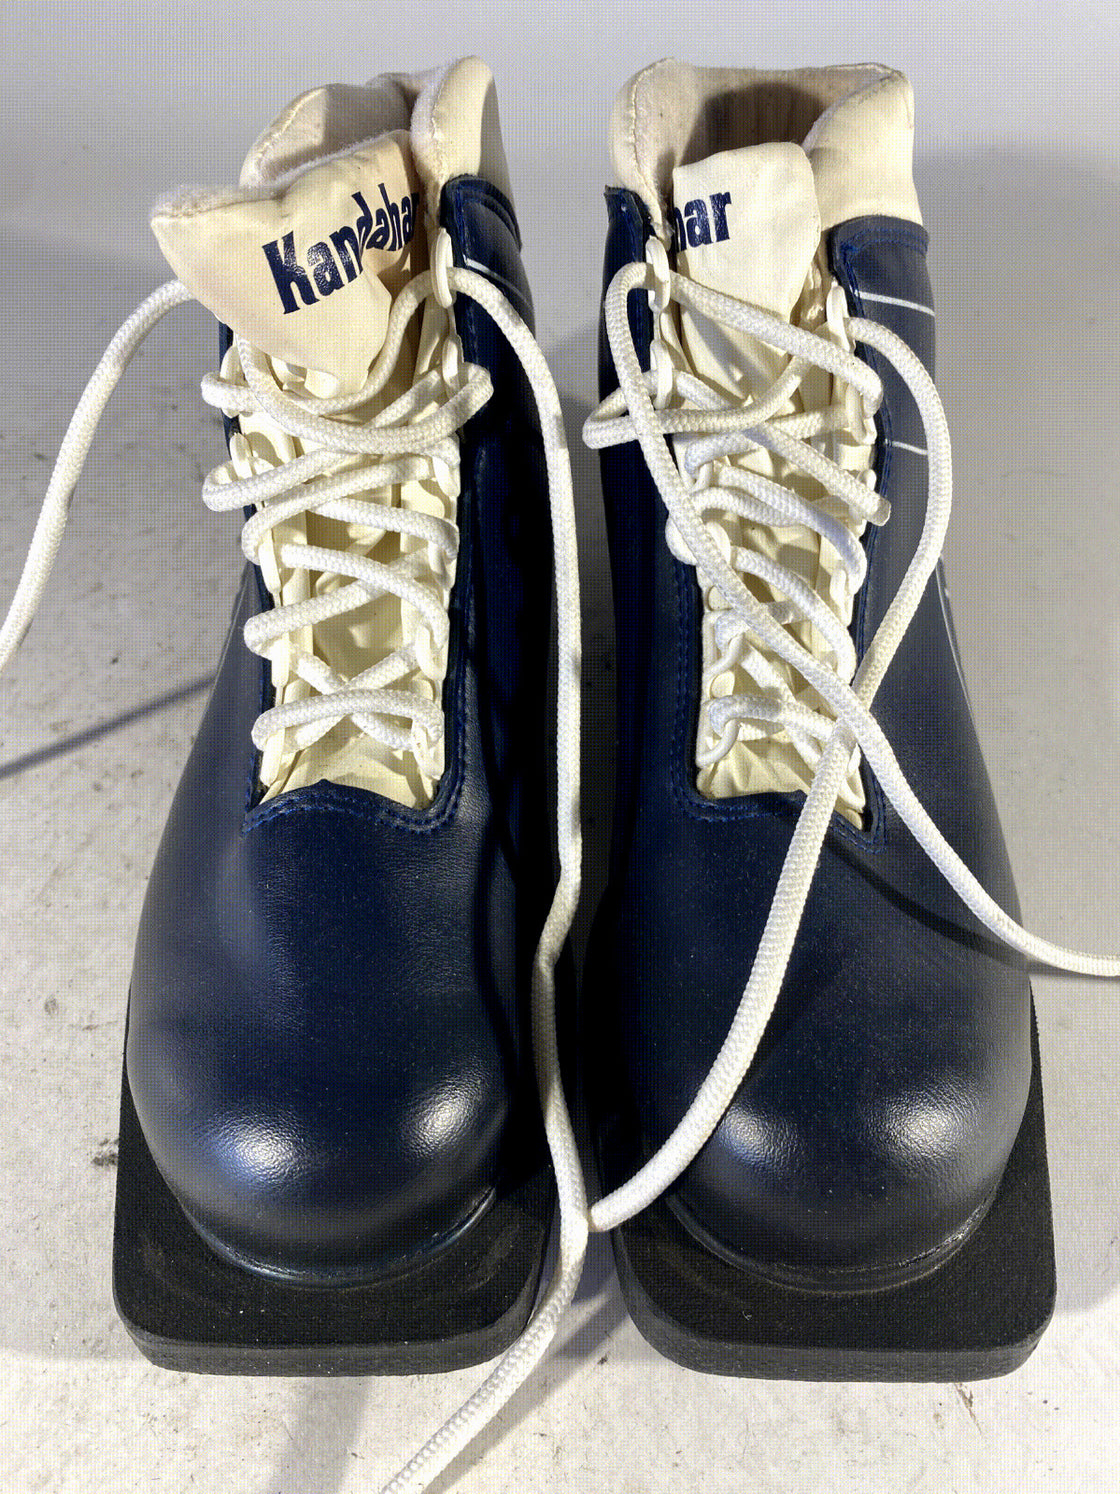 Kandahar Retro Vintage Classic Nordic Norm Ski Boots Size EU40 US7 NN 75mm